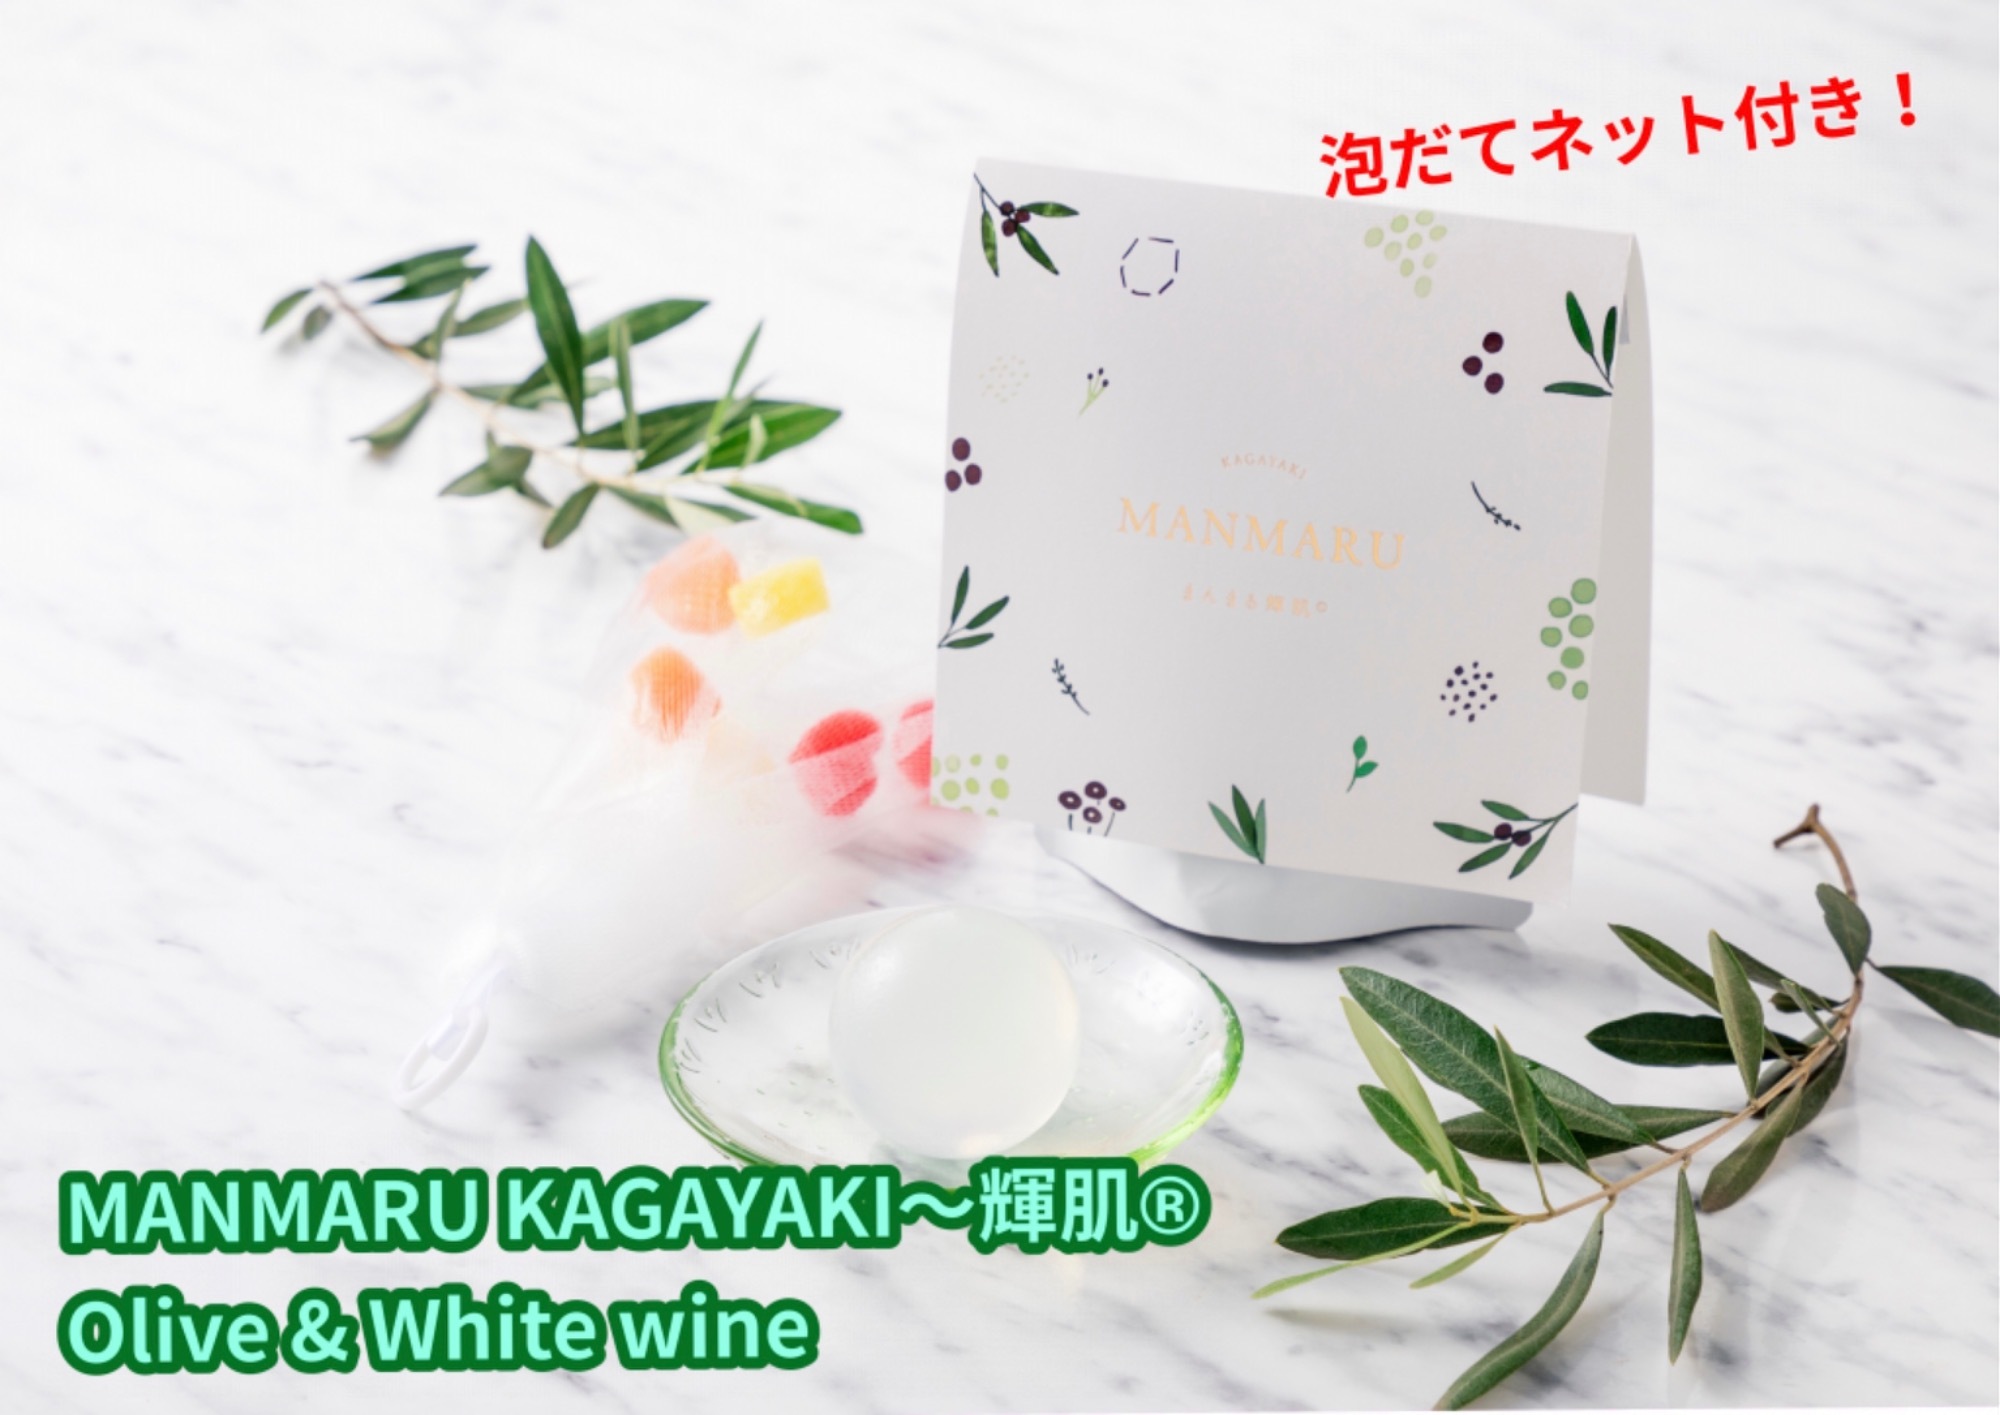 MANMARU KAGAYAKI Olive & White wine